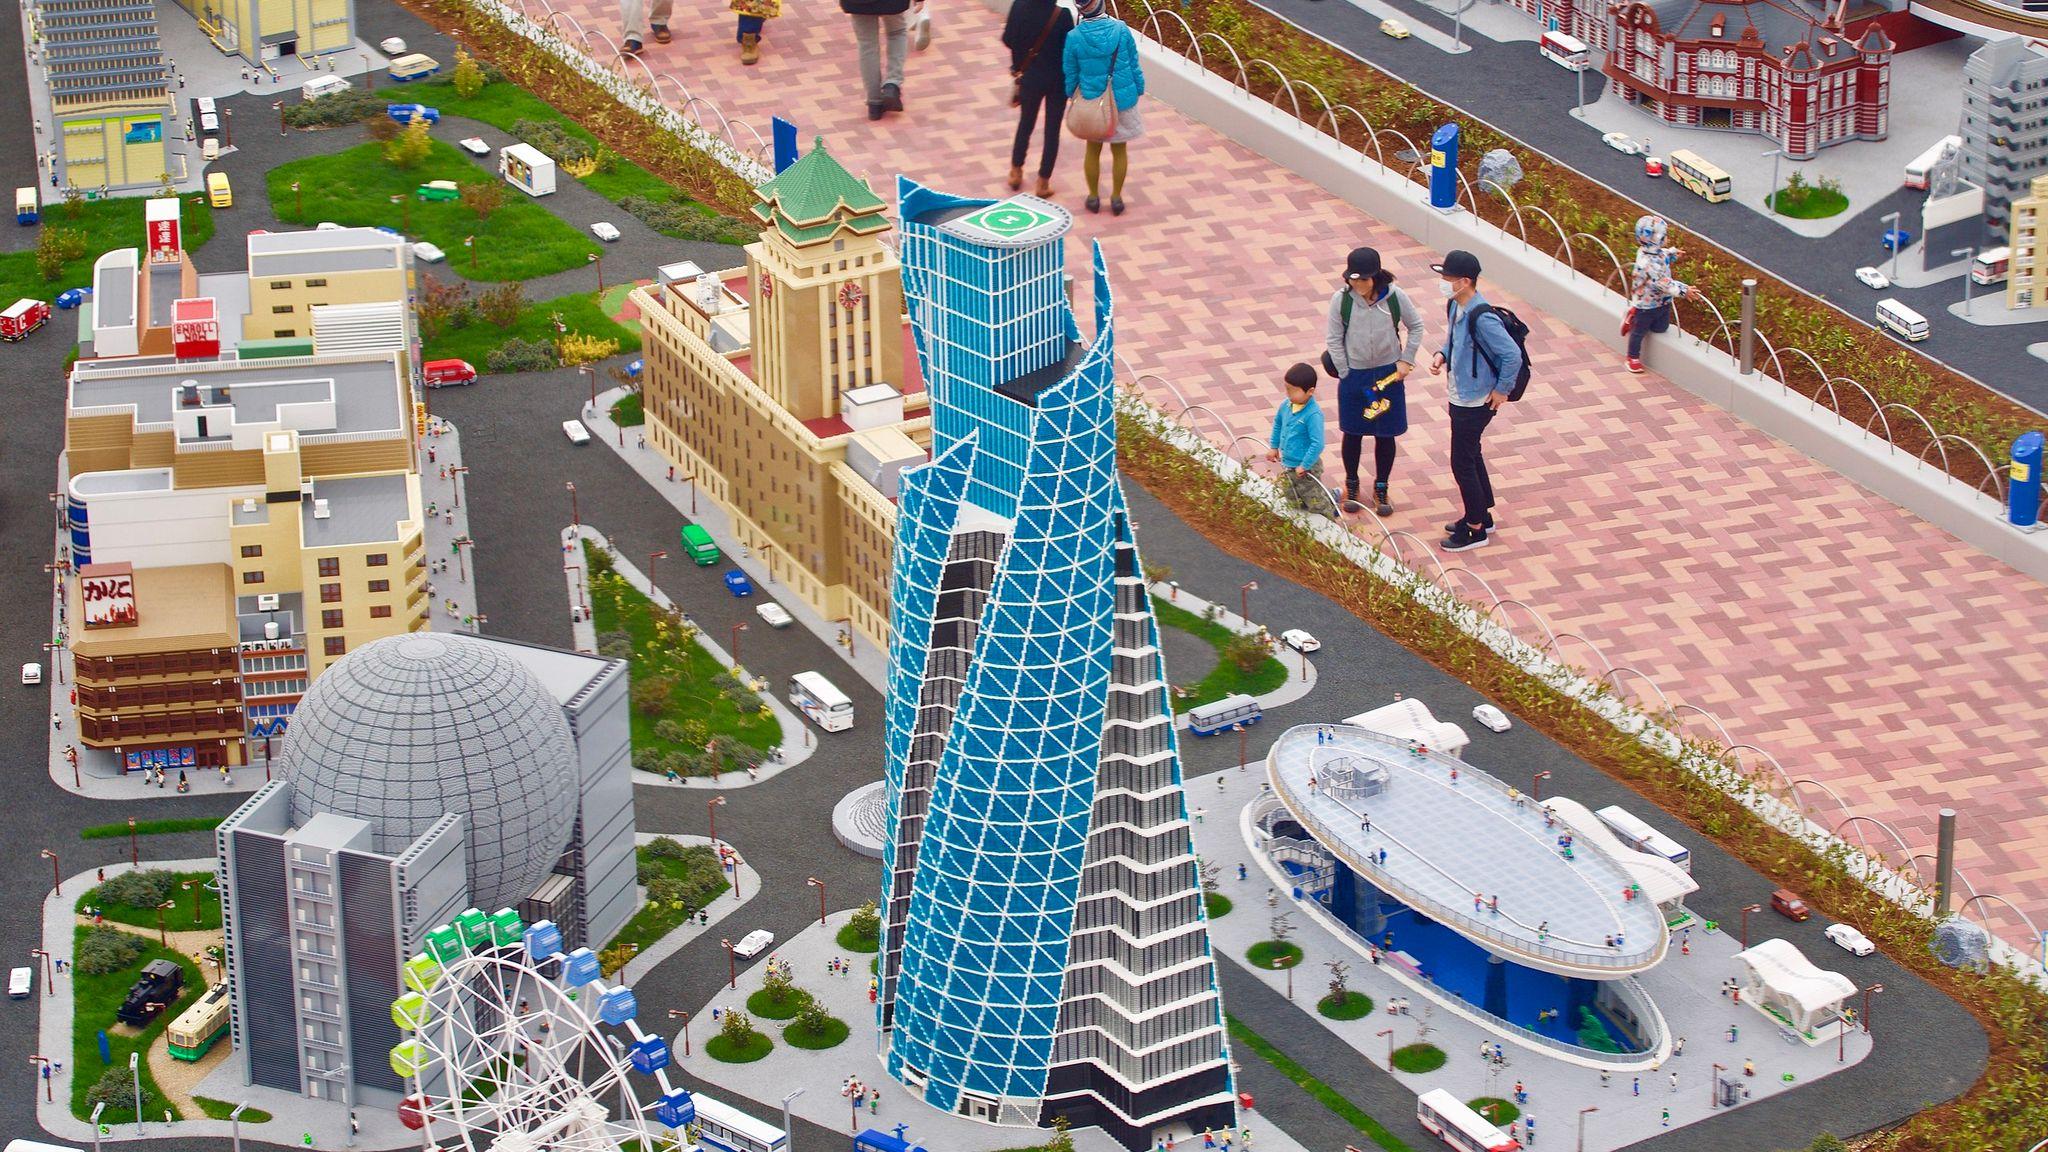 Miniland installation, built with LEGO-bricks in Legoland Japan Resort, Nagoya